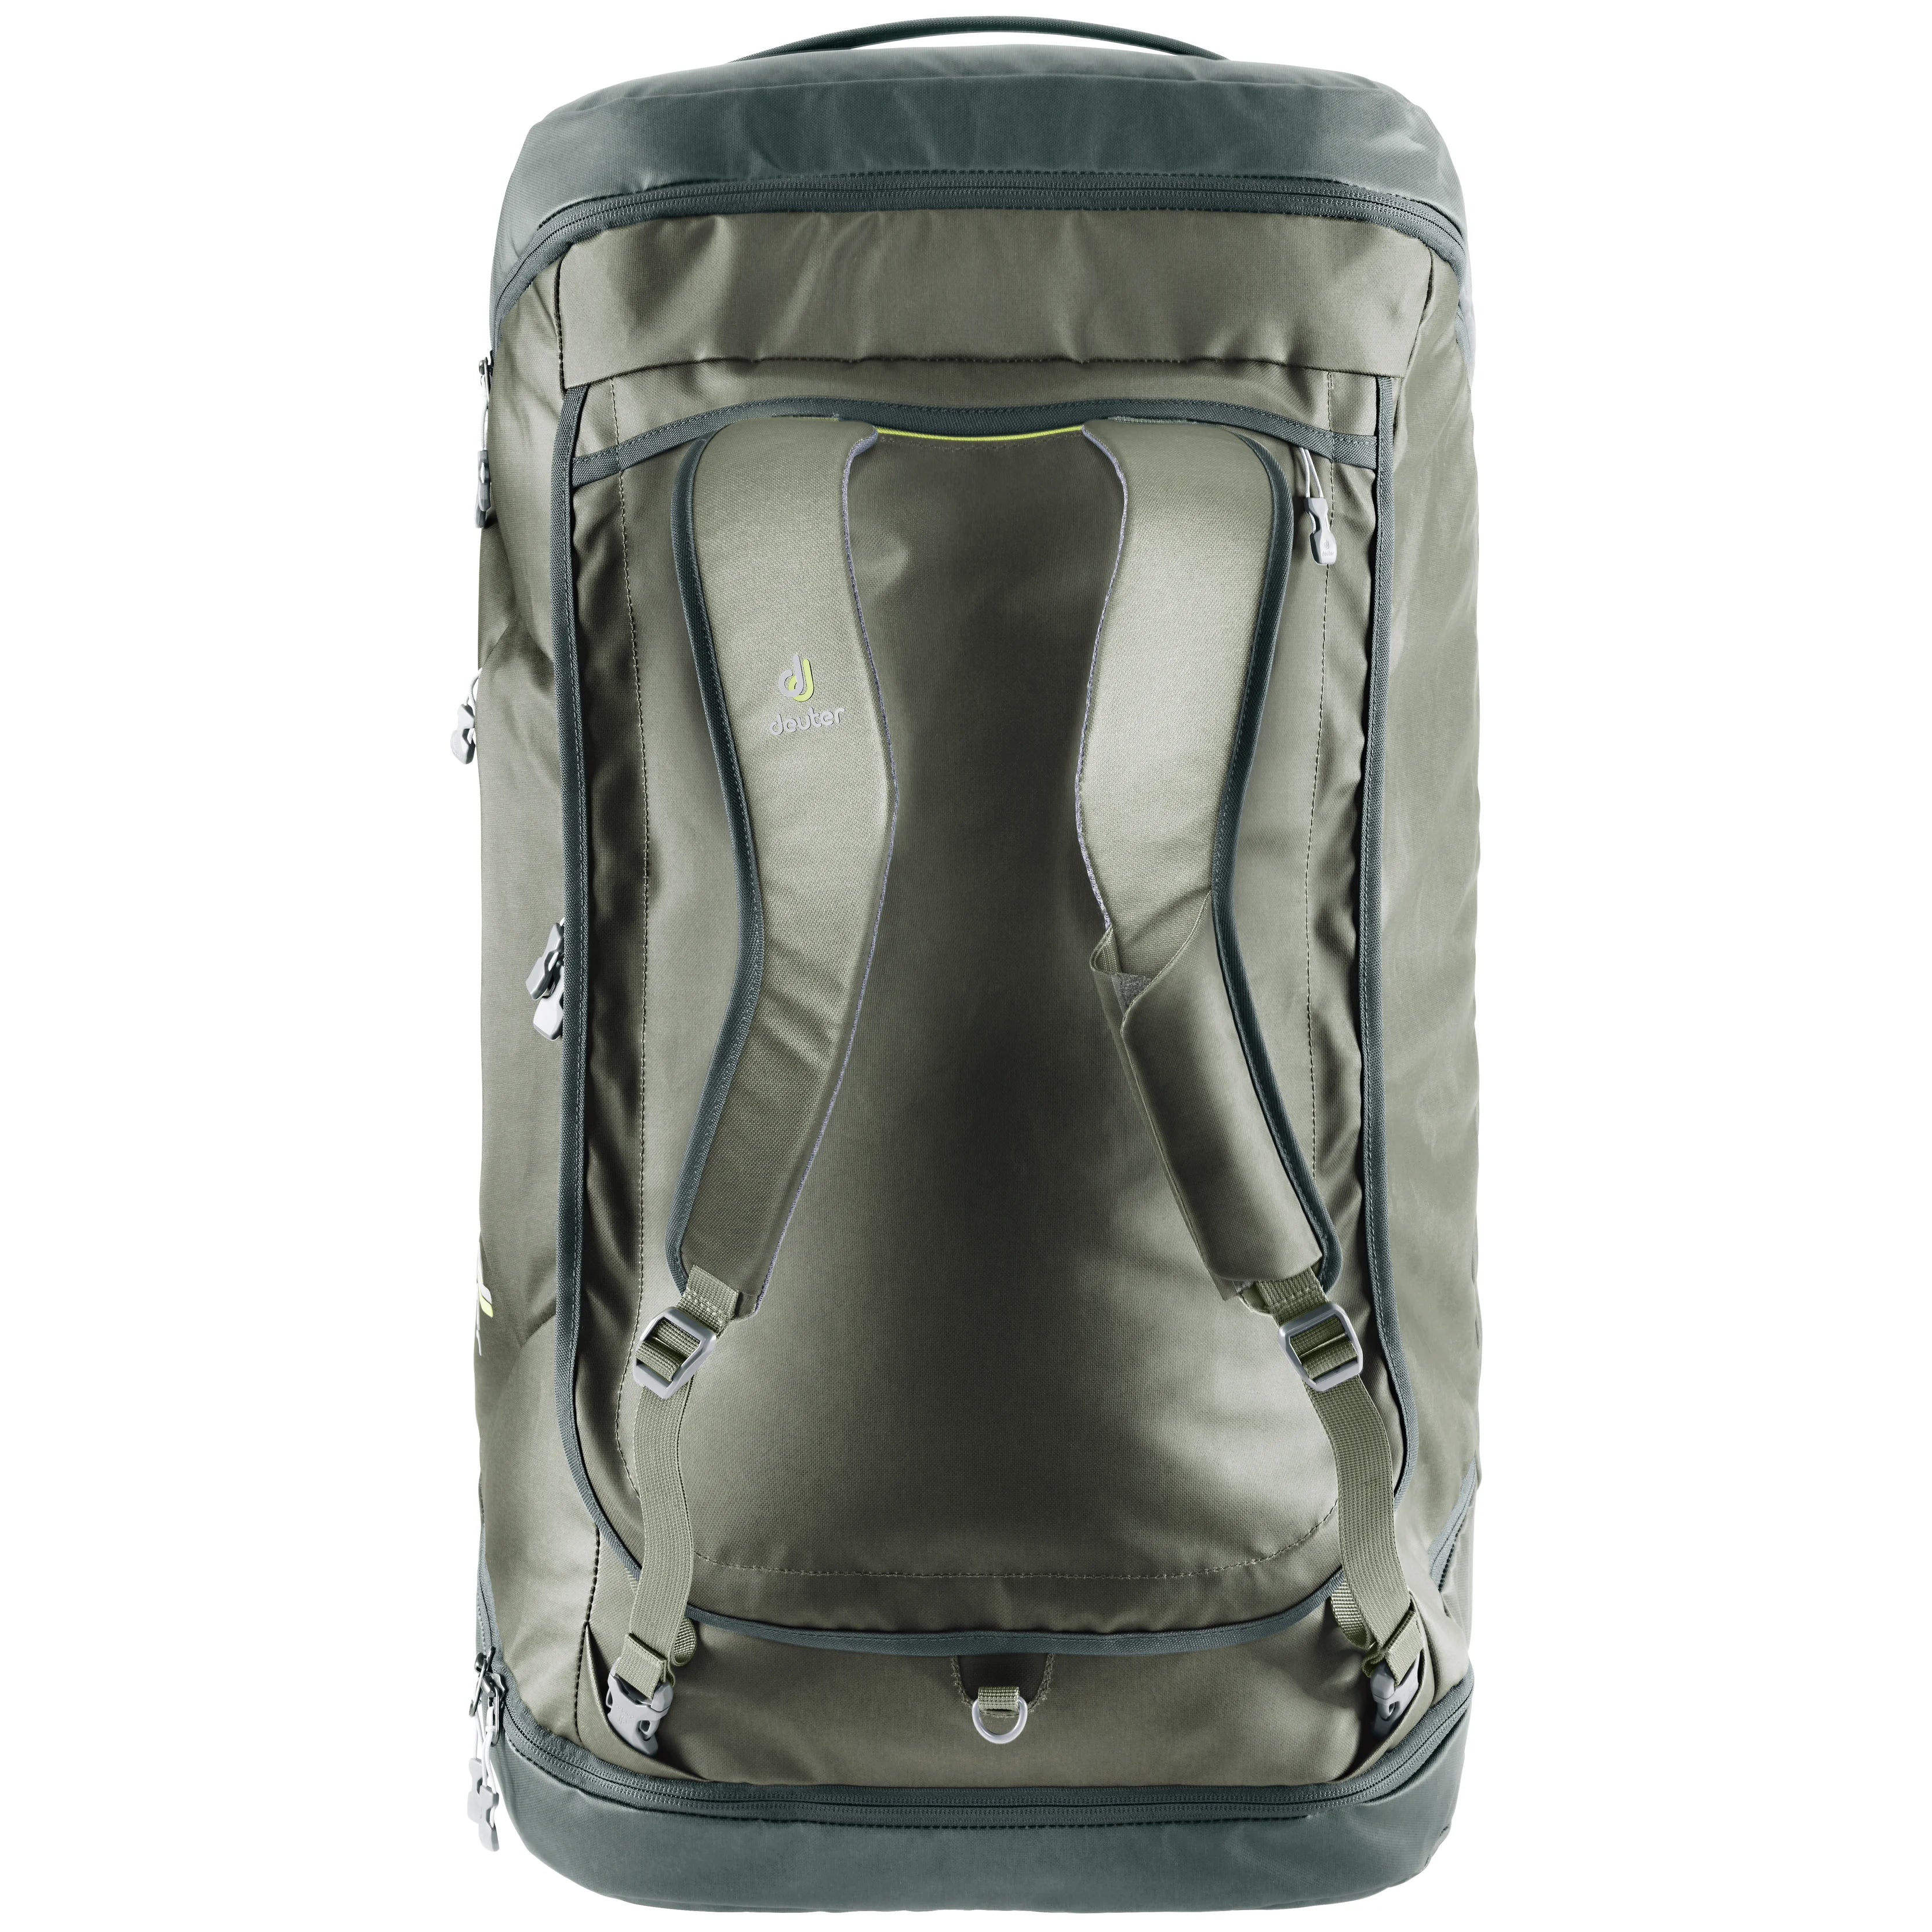 Deuter Travel Aviant Duffel Pro 60 sac de voyage 66 cm - jade-vert d'eau